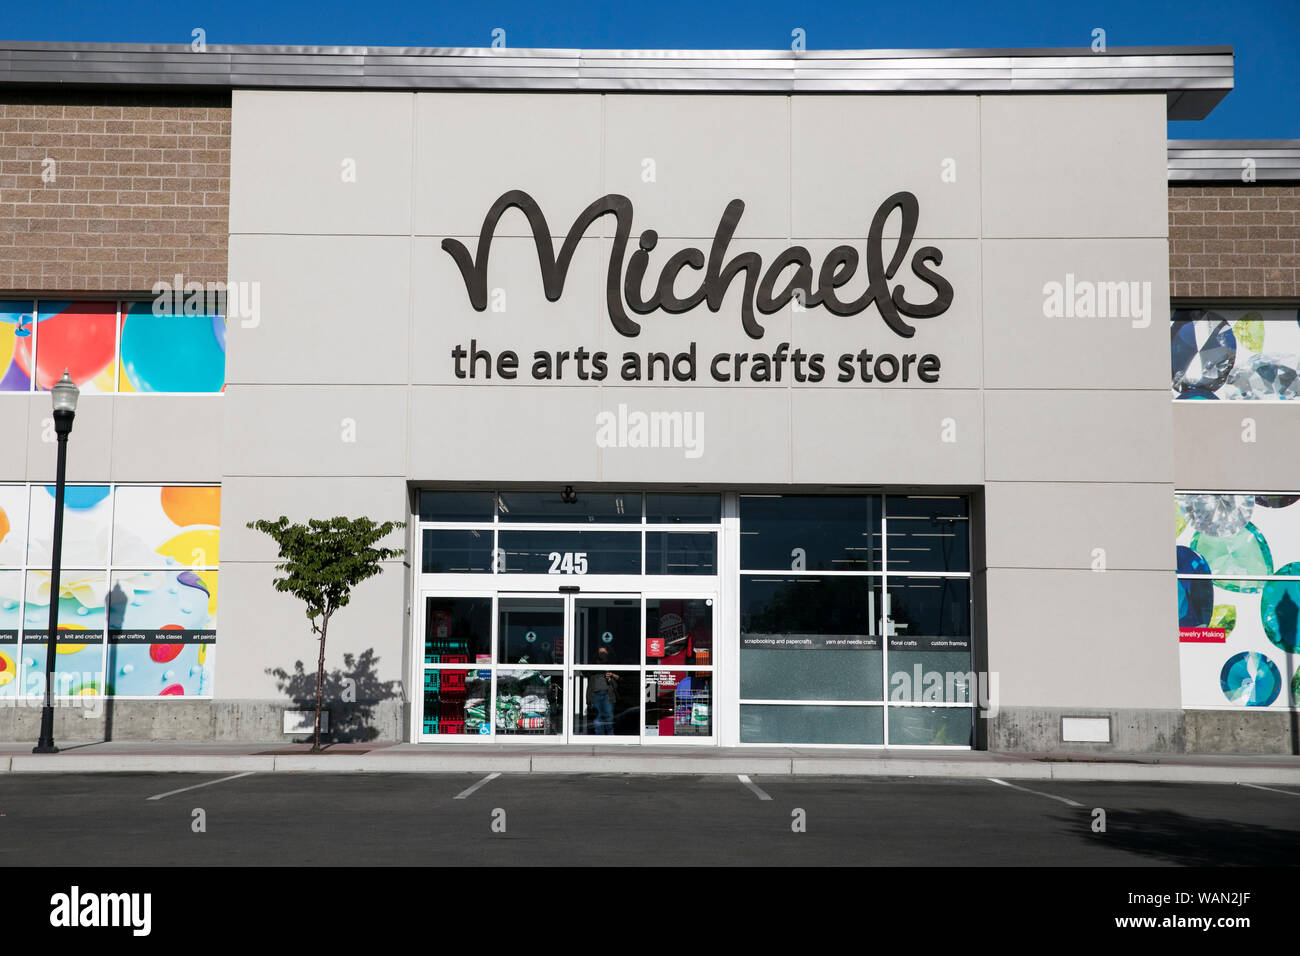 2,394 Michaels Store Images, Stock Photos, 3D objects, & Vectors